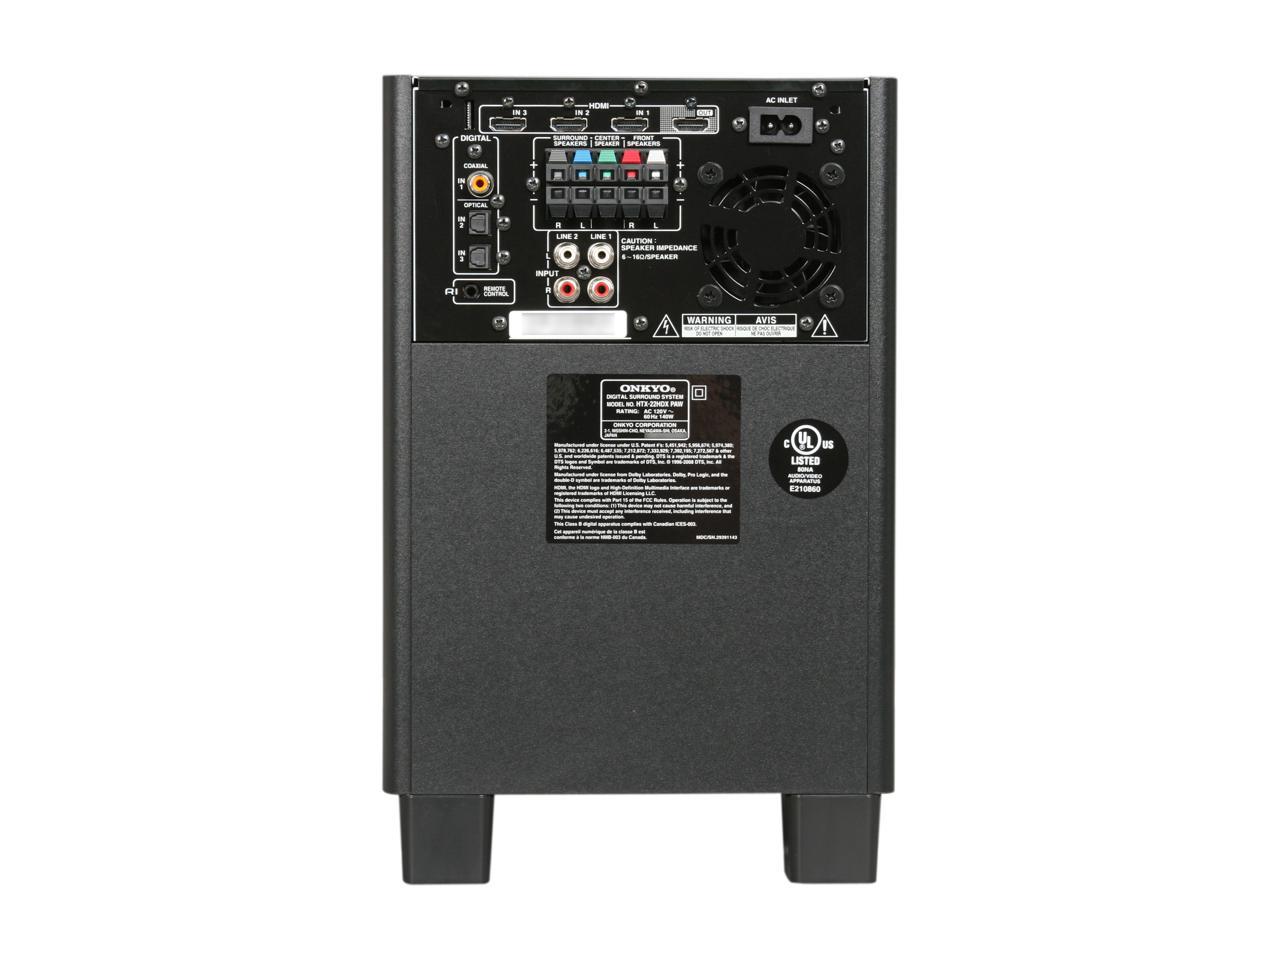 ONKYO HTX-22HDX Ultra-Compact HD Home Theater System - Newegg.com